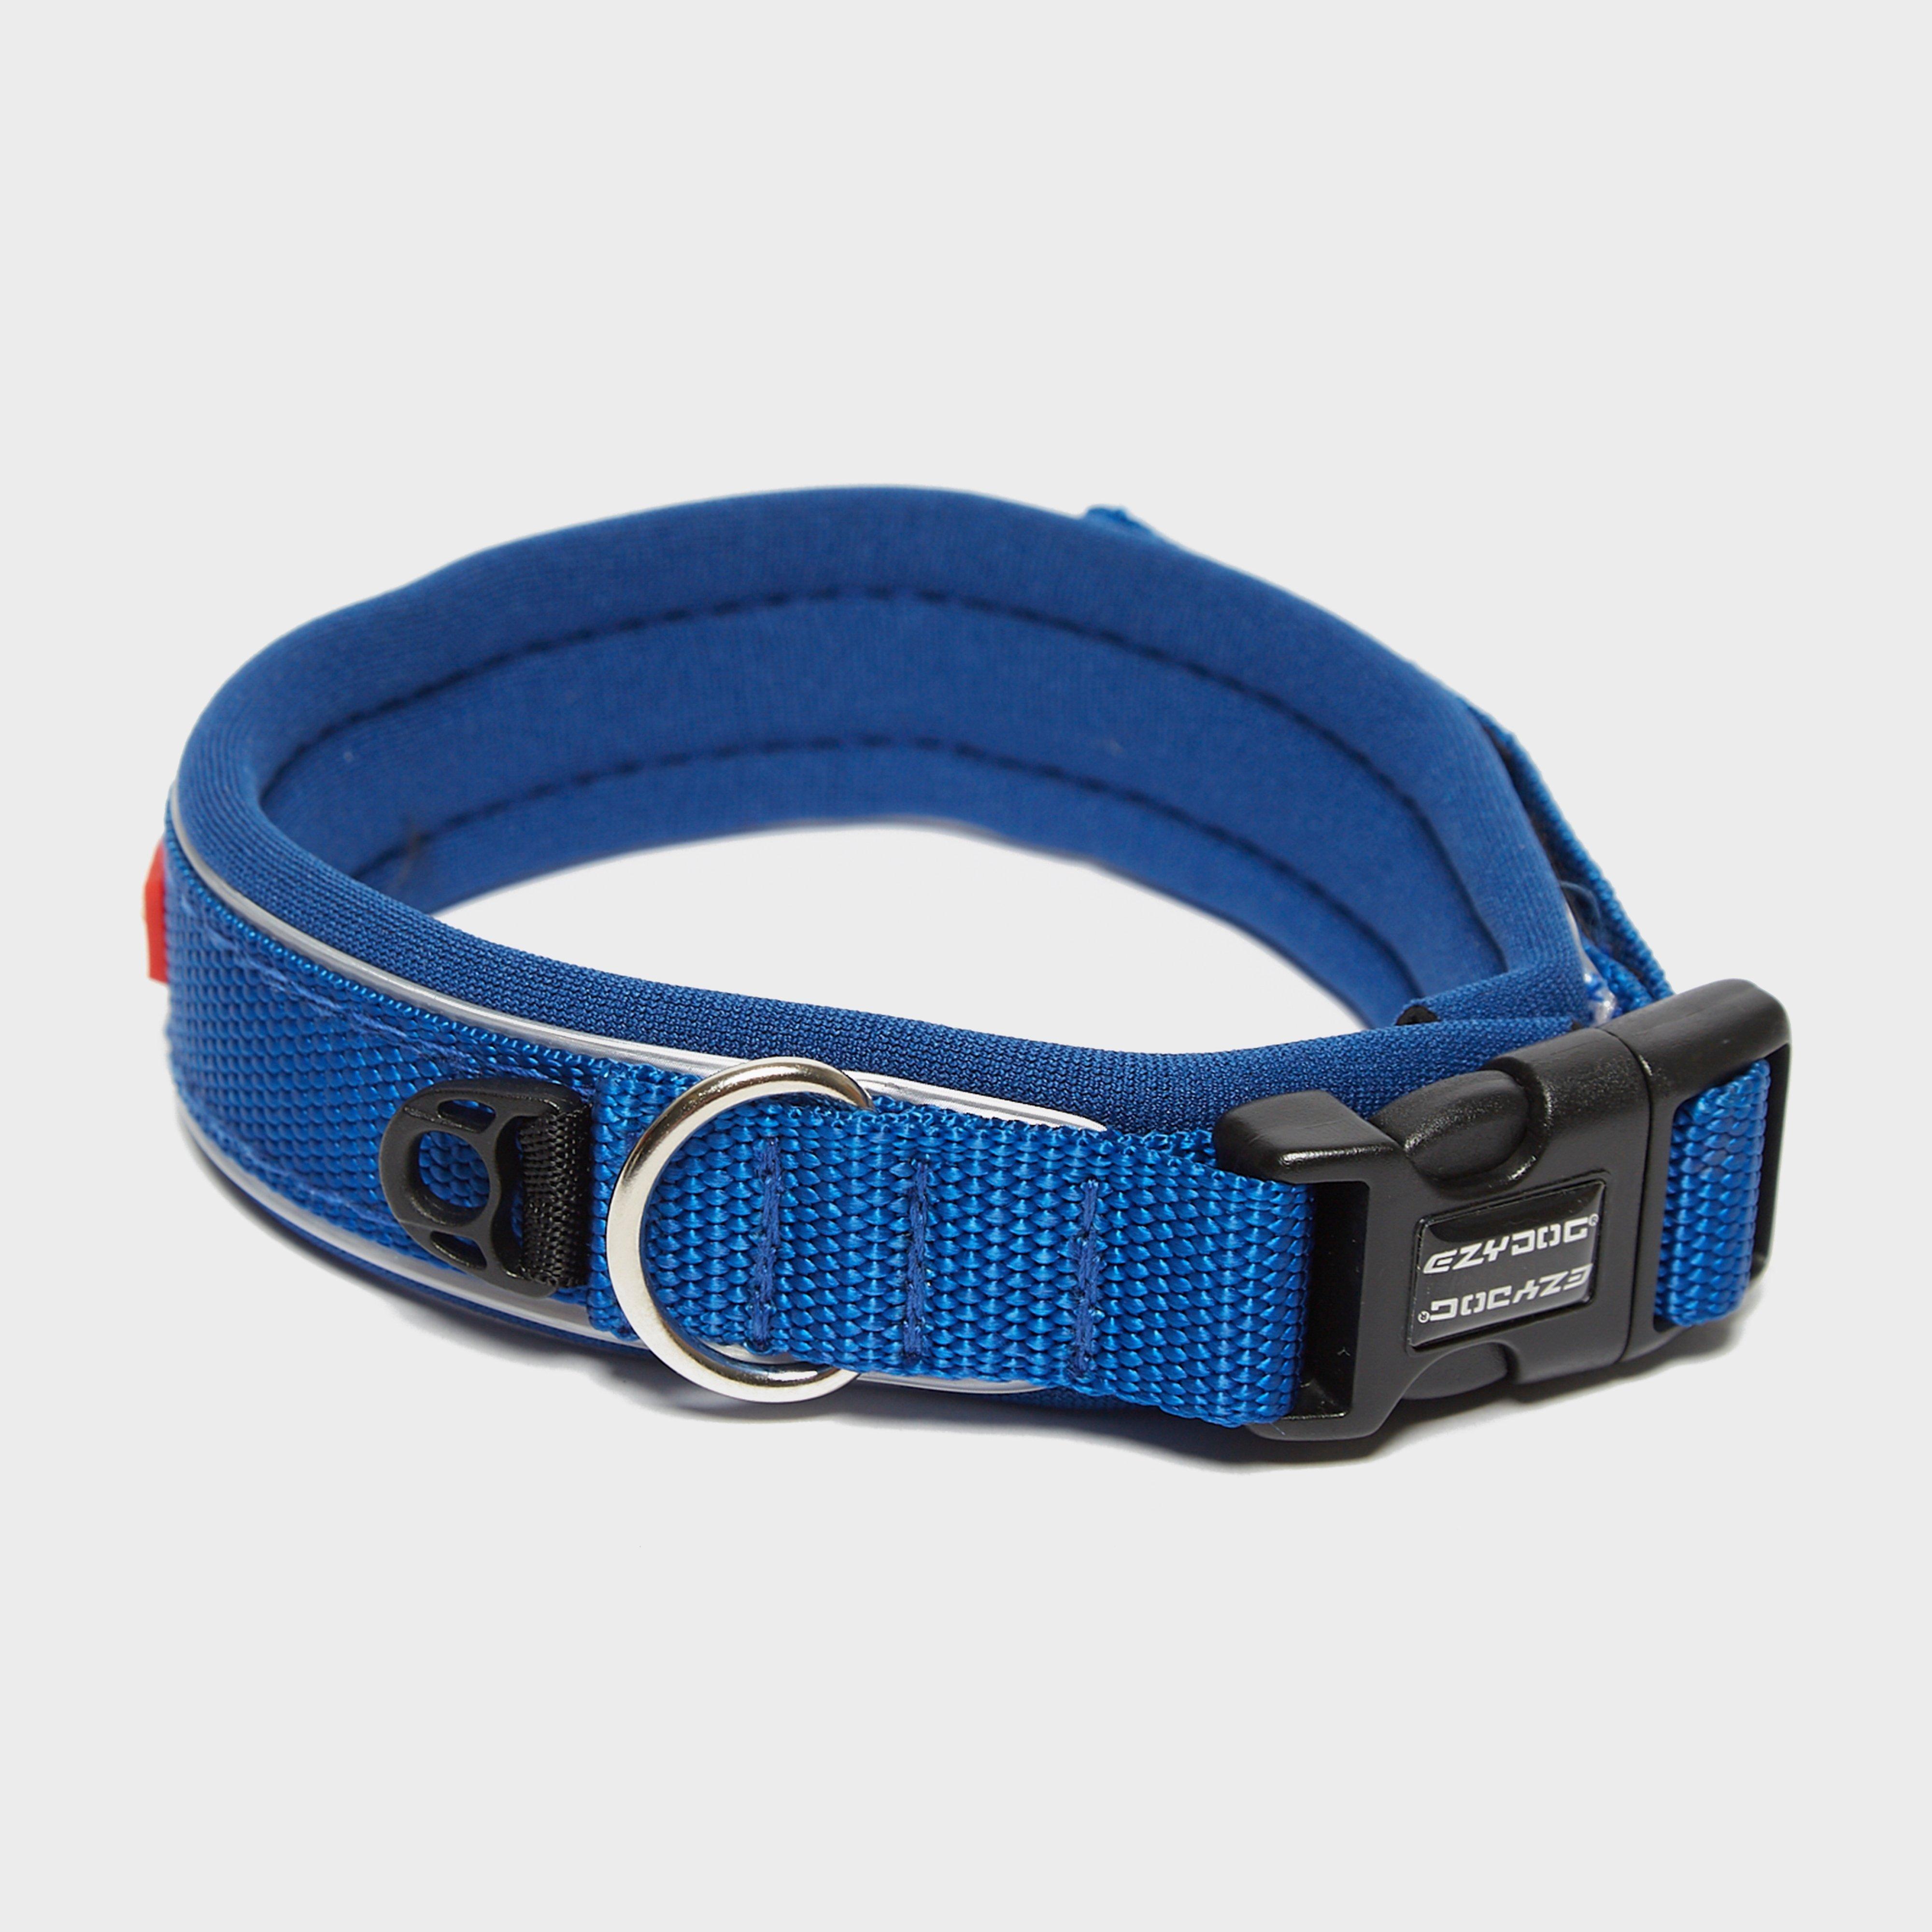 Ezy-dog Classic Neo Collar Small - Blue/mbl  Blue/mbl